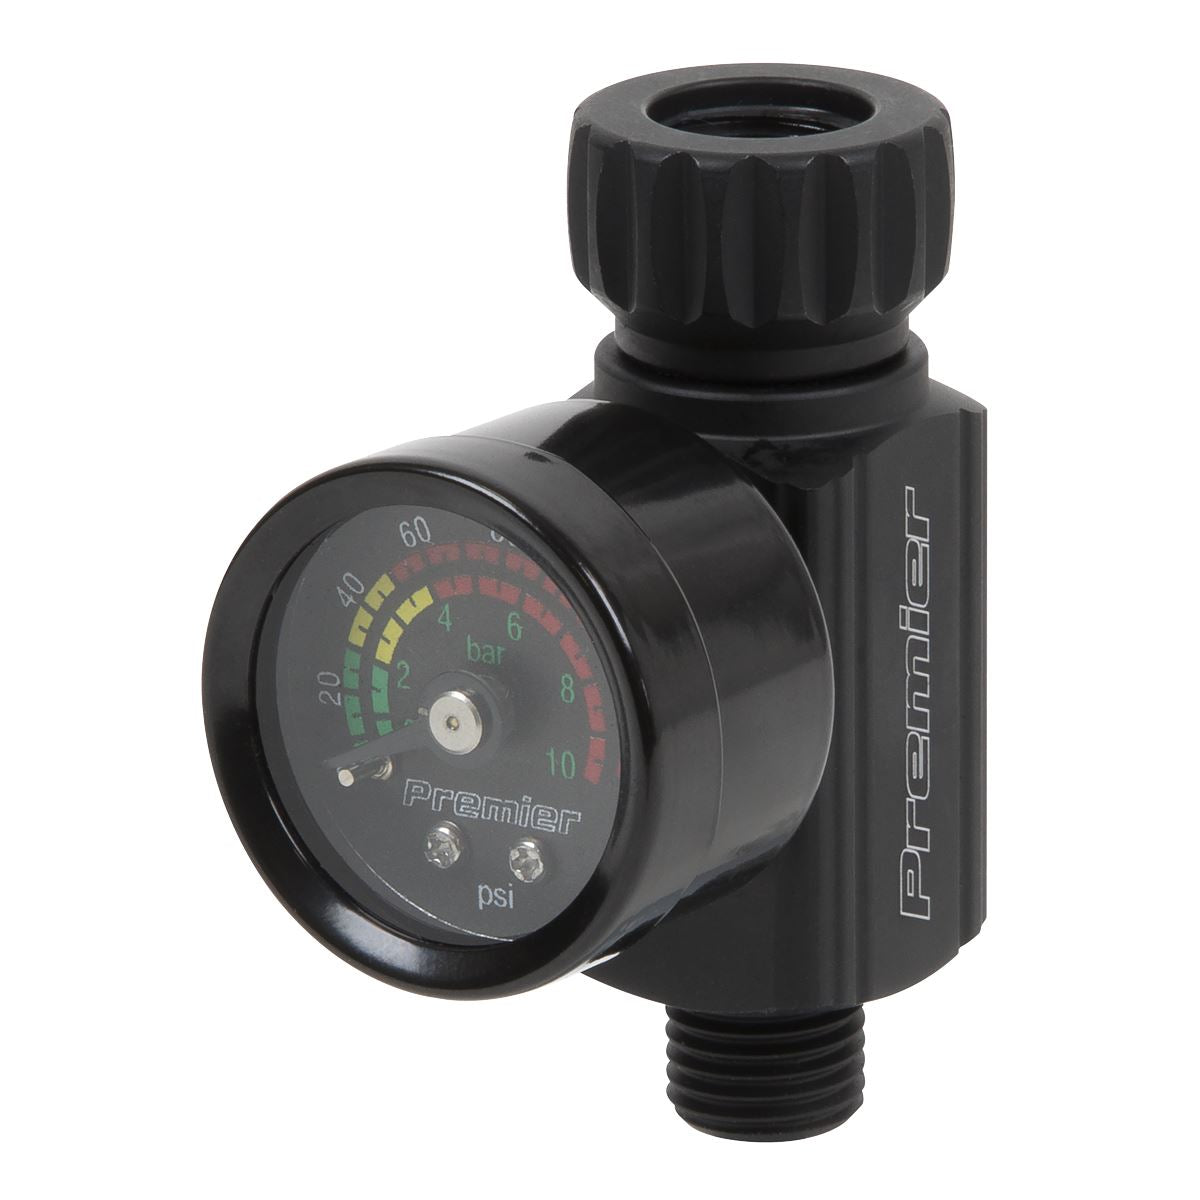 Sealey Premier On-Gun Air Pressure Regulator/Gauge with Glass Lens